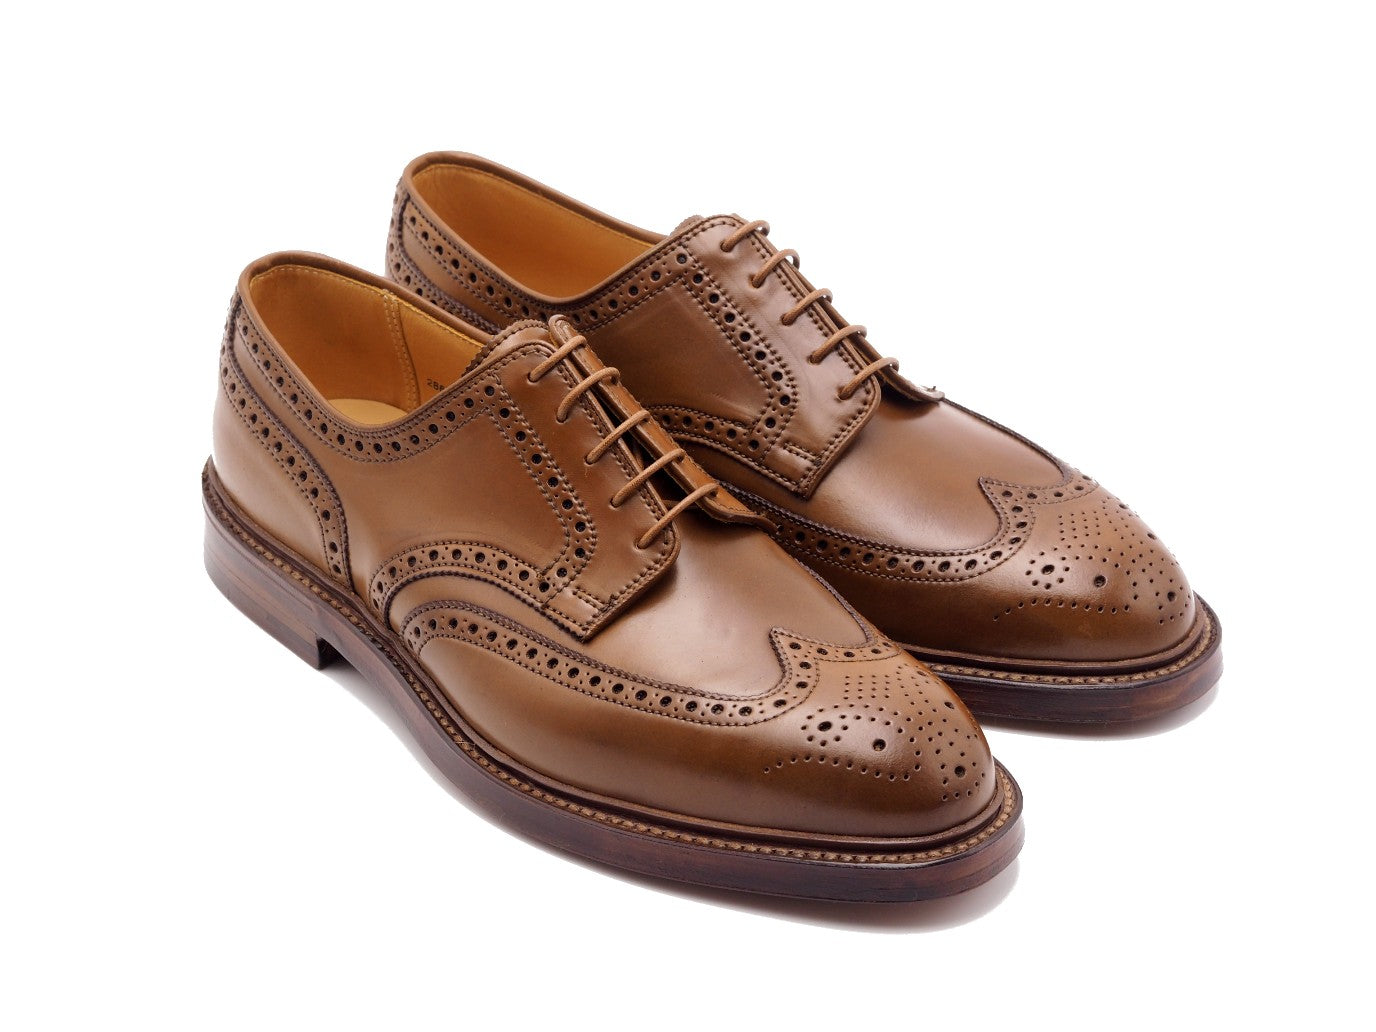 Crockett & Jones | Mens Shoes, Handmade in England – Double Monk